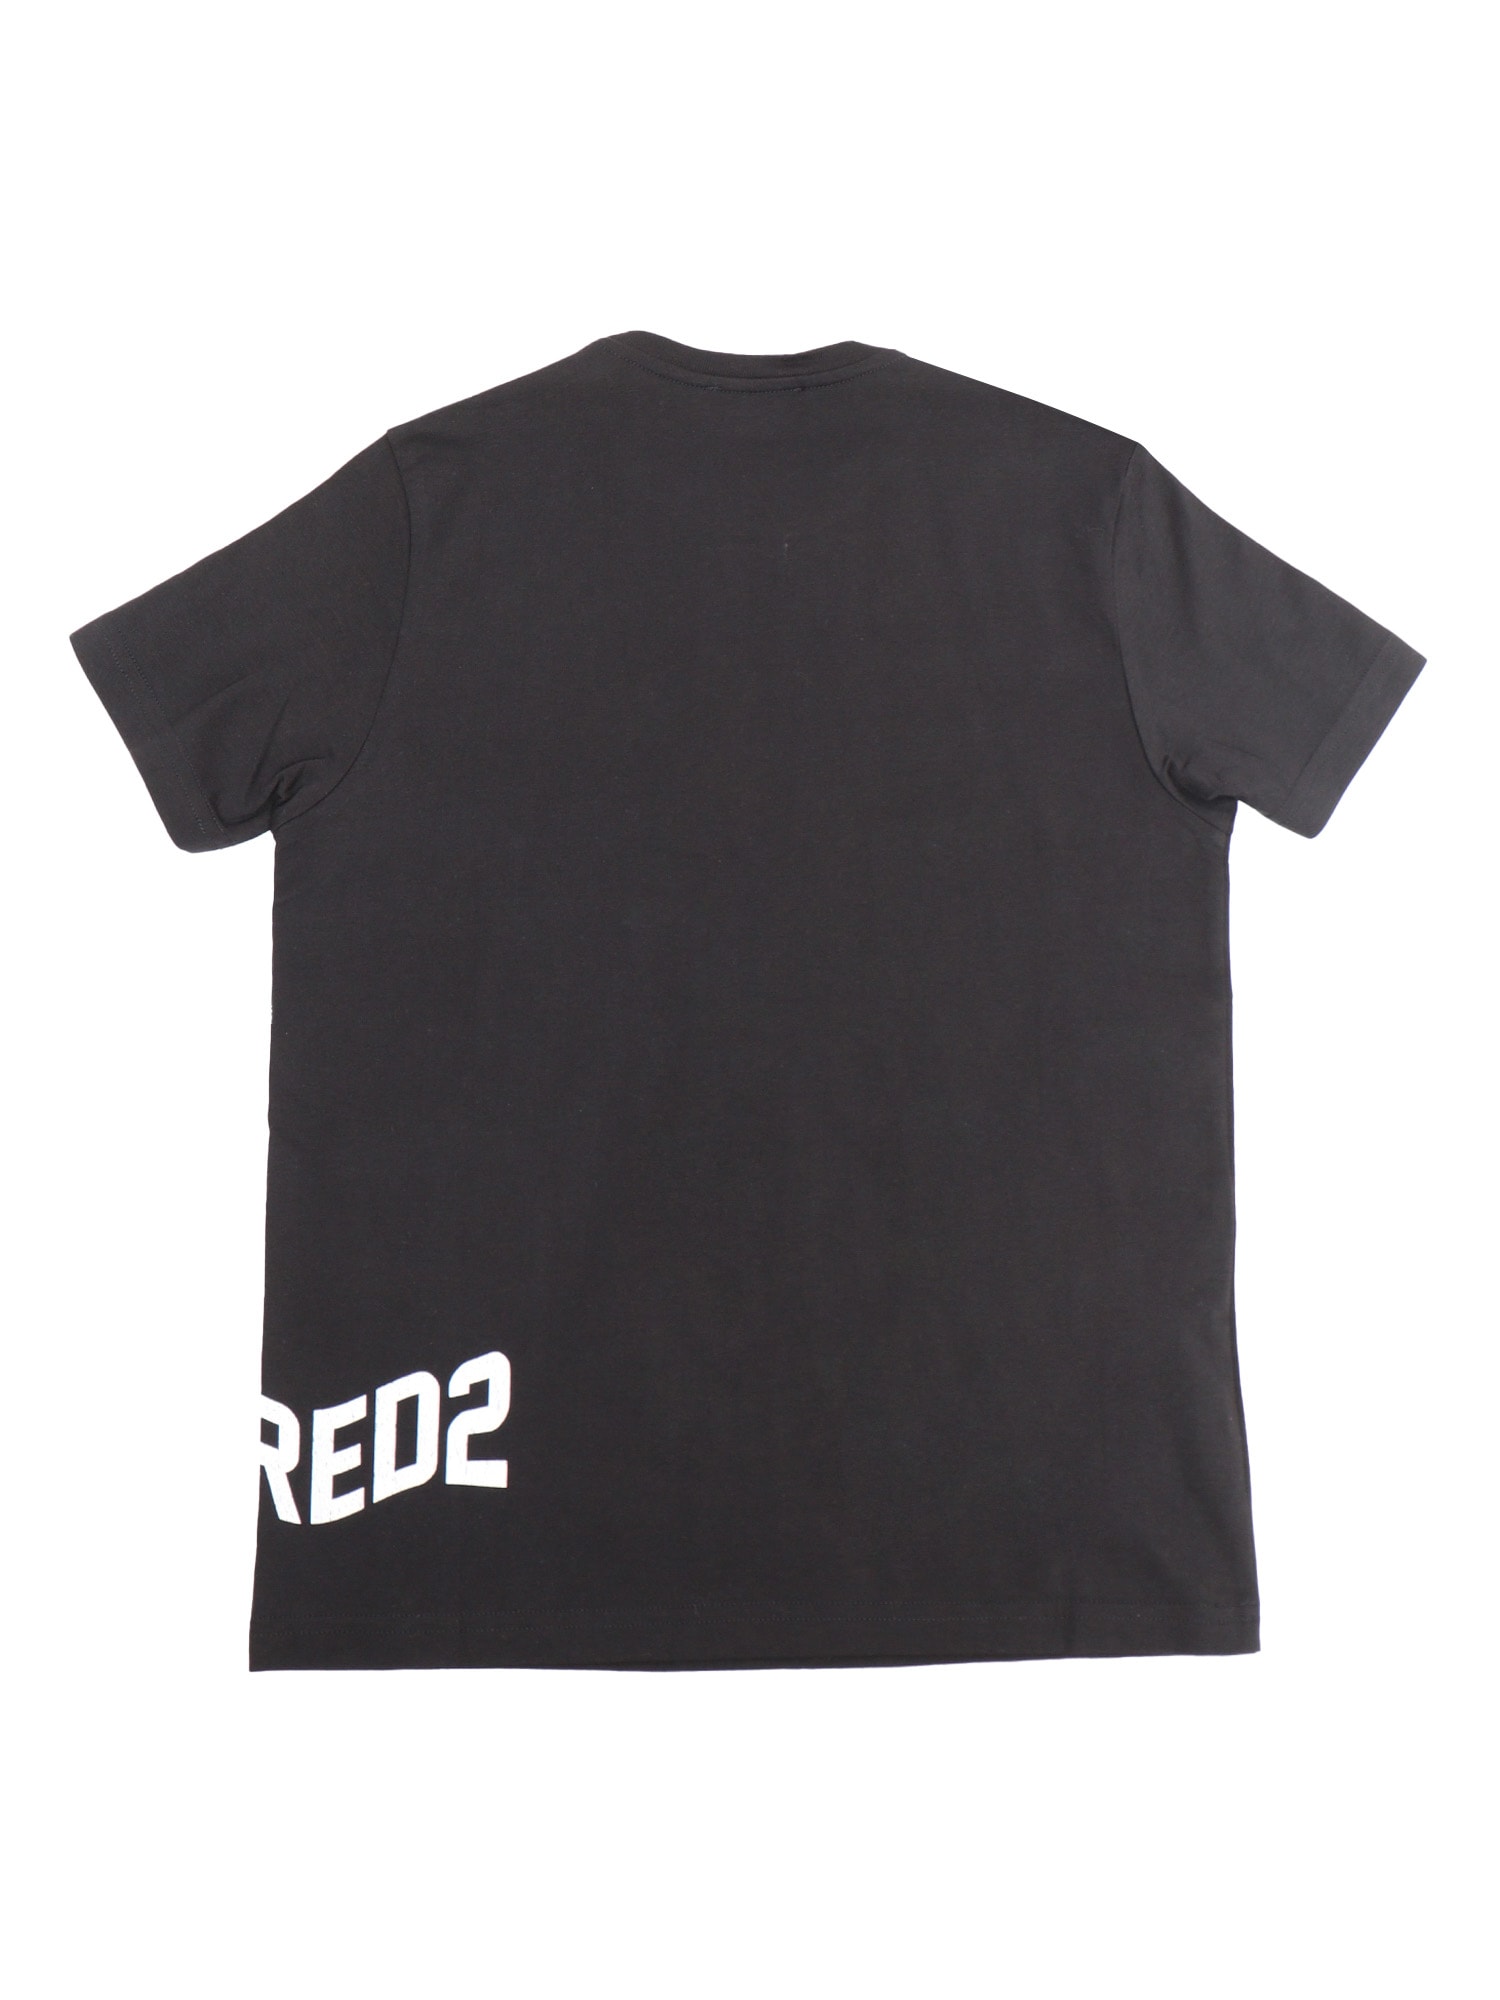 Shop Dsquared2 D-squared2 T-shirt In Black